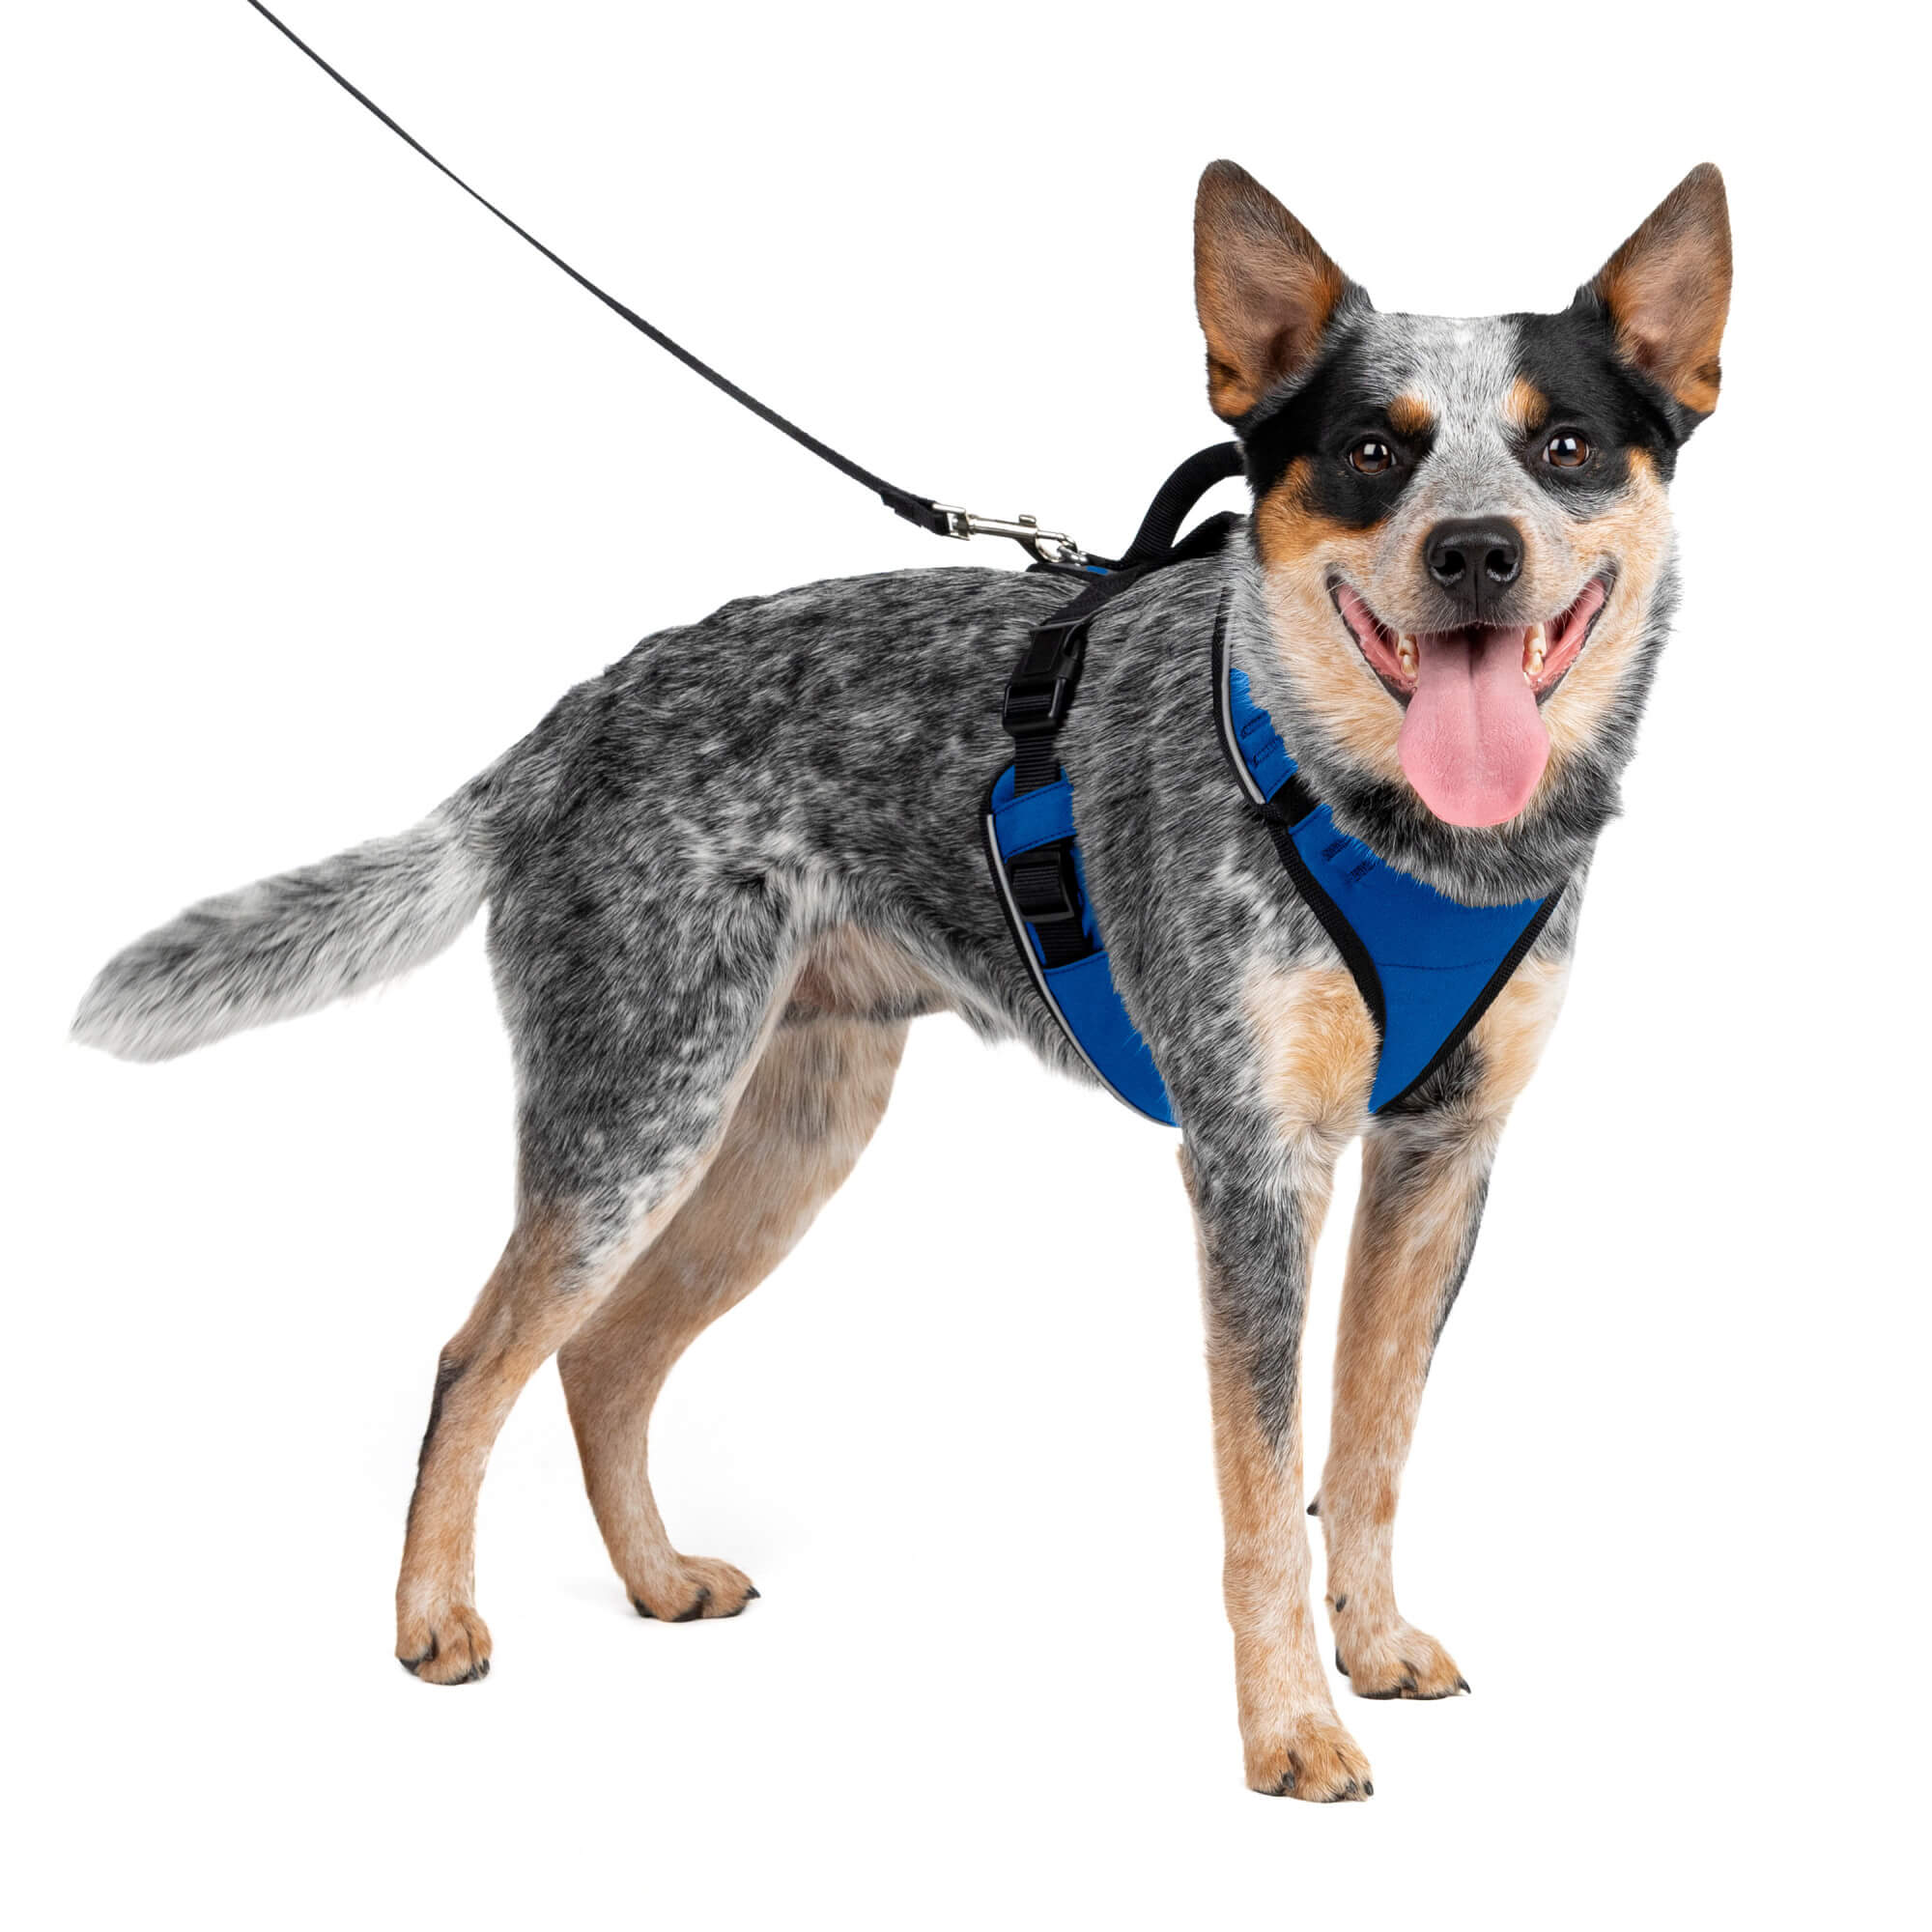 Dog wearing blue petsafe easysport harness in large